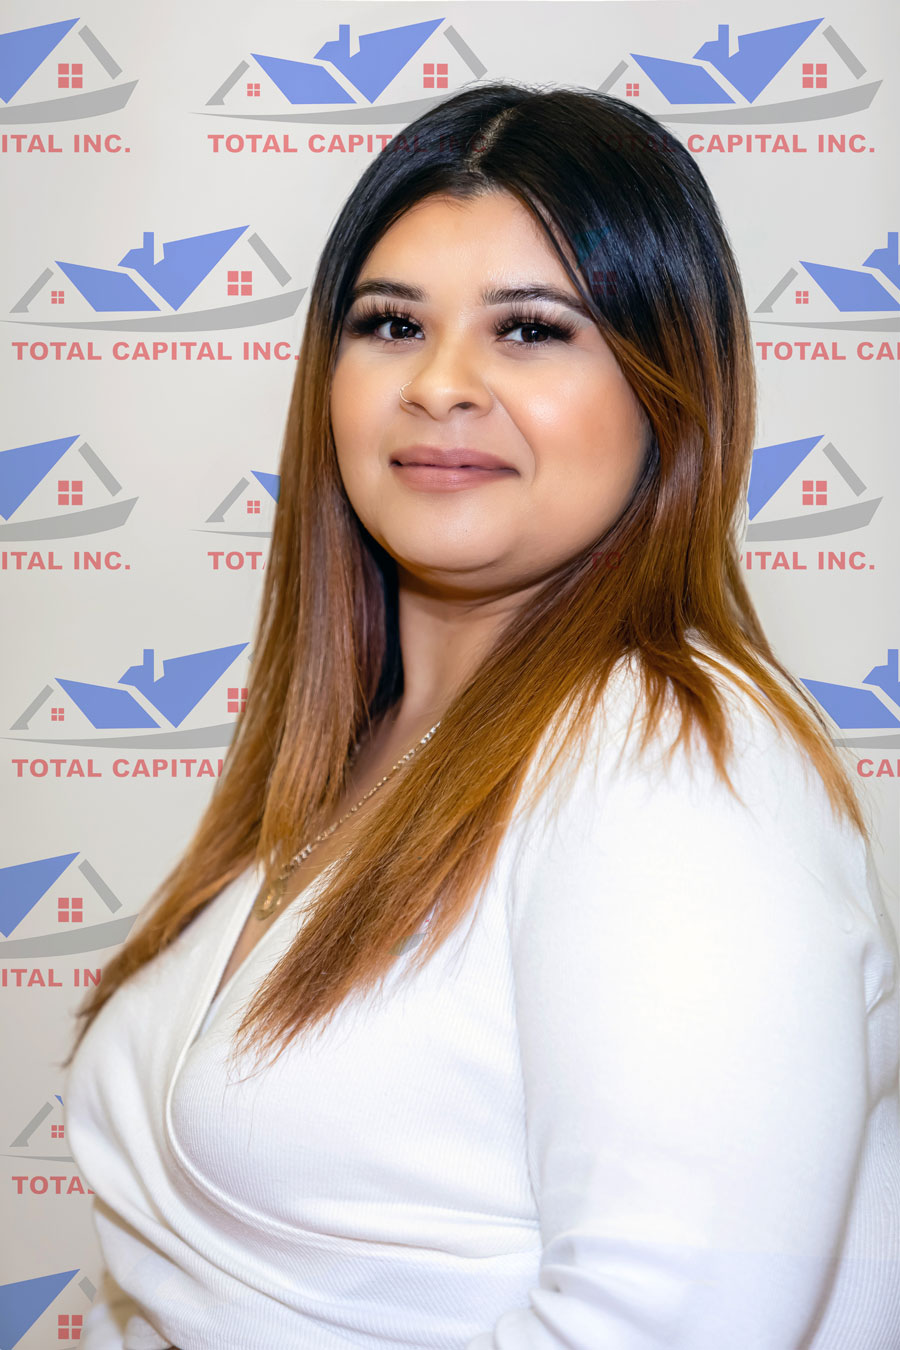 Jazmin Tapia - Administrative Assistant